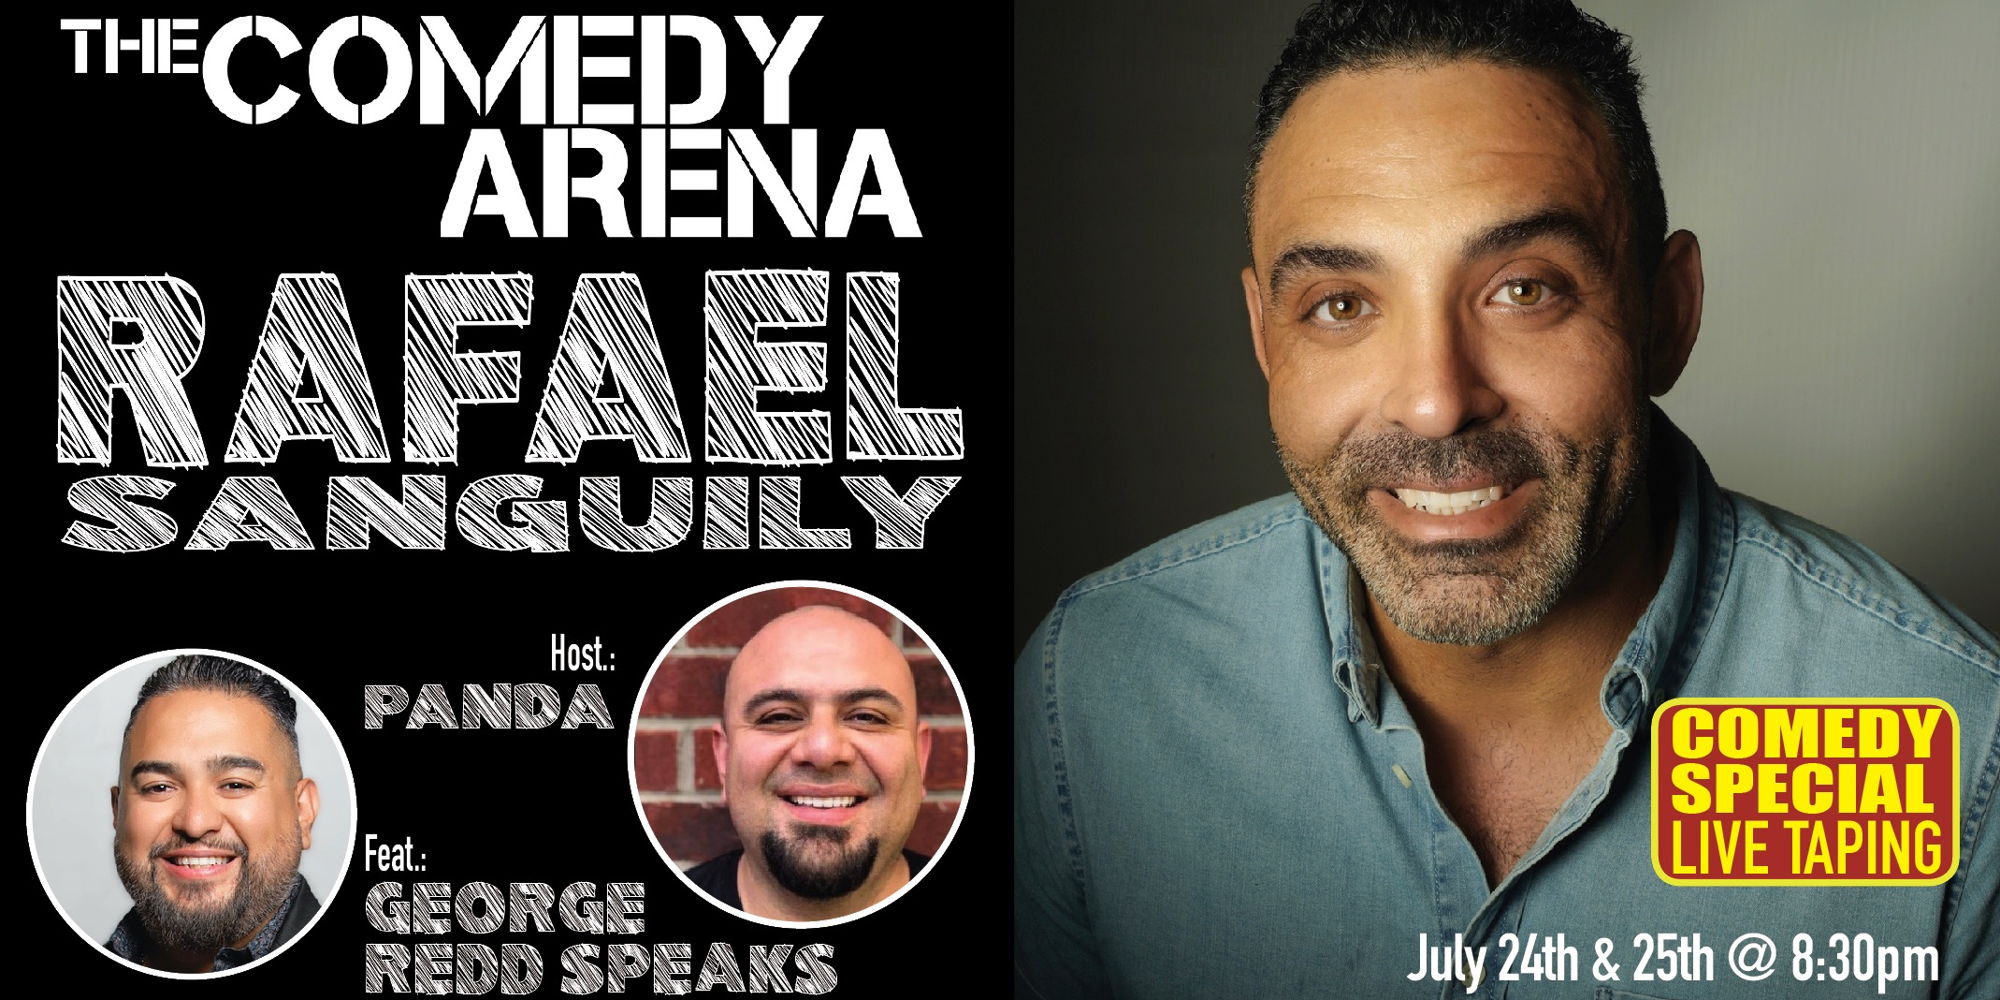 Rafael Sanguily Headlines The Comedy Arena